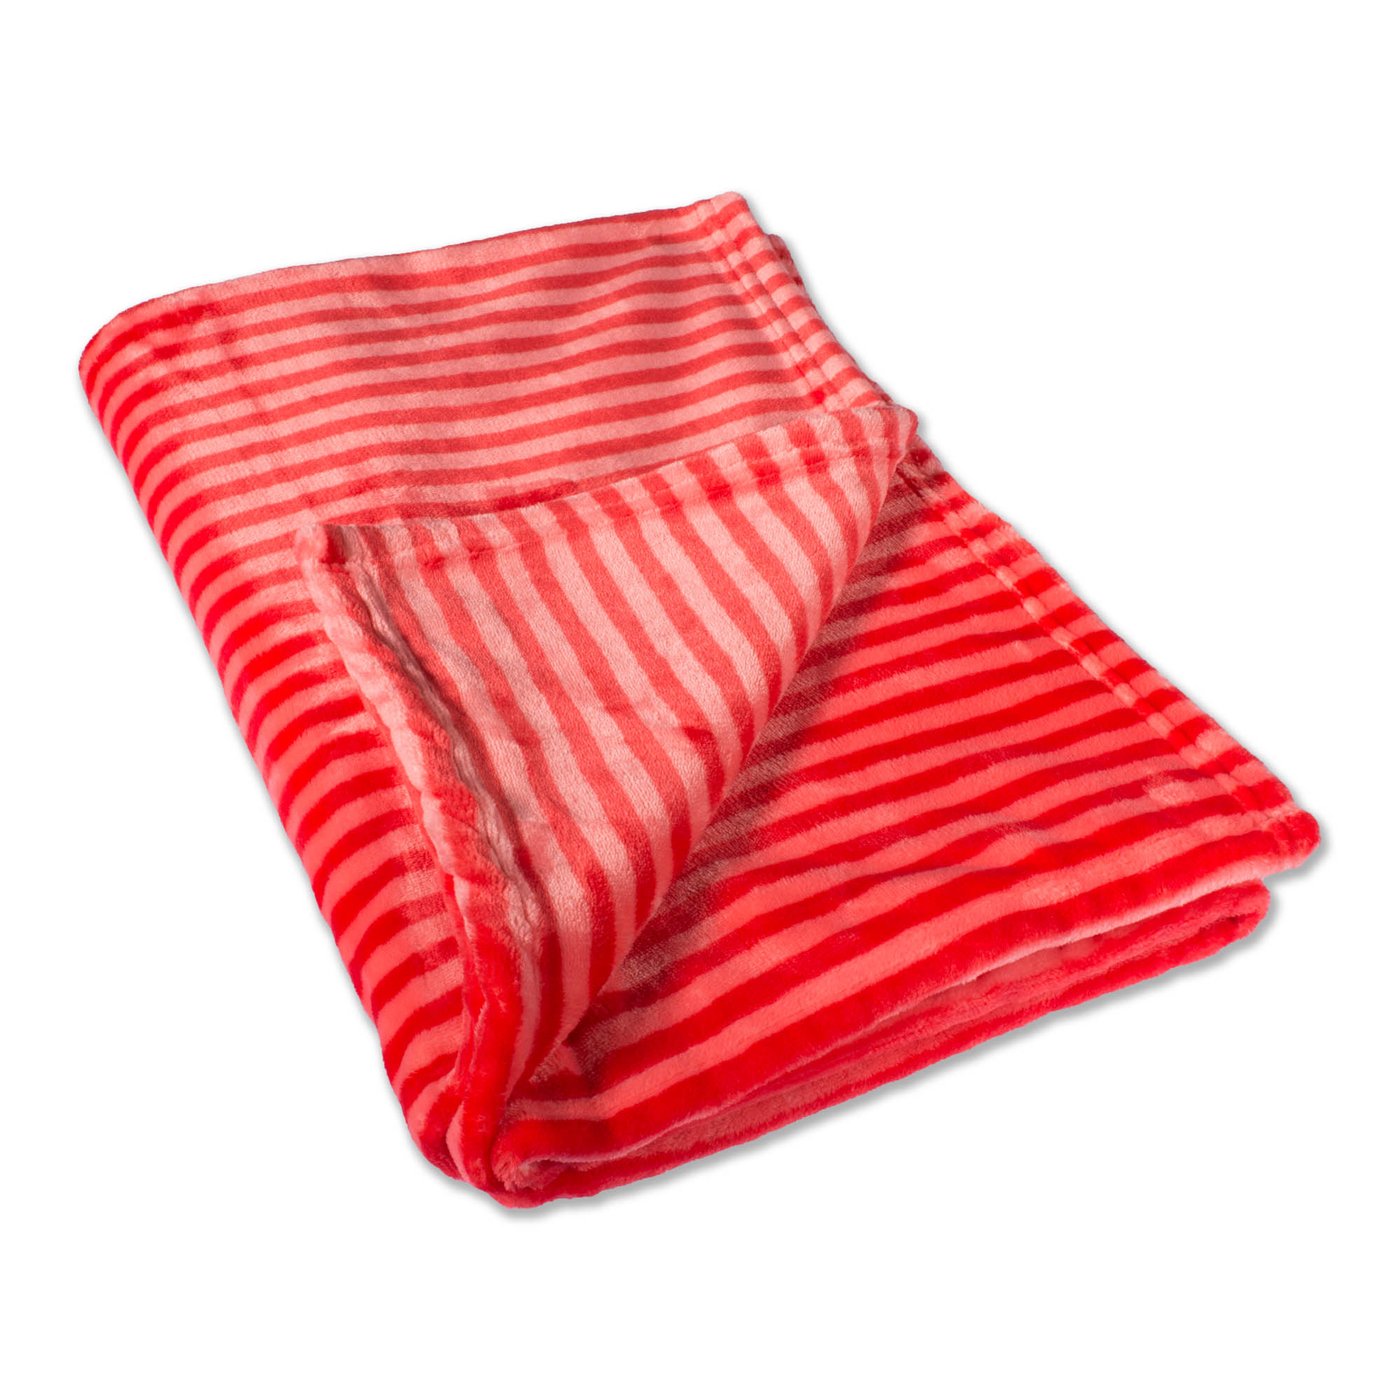 Red Striped FLEECE Throw BLANKET - 50 x 60